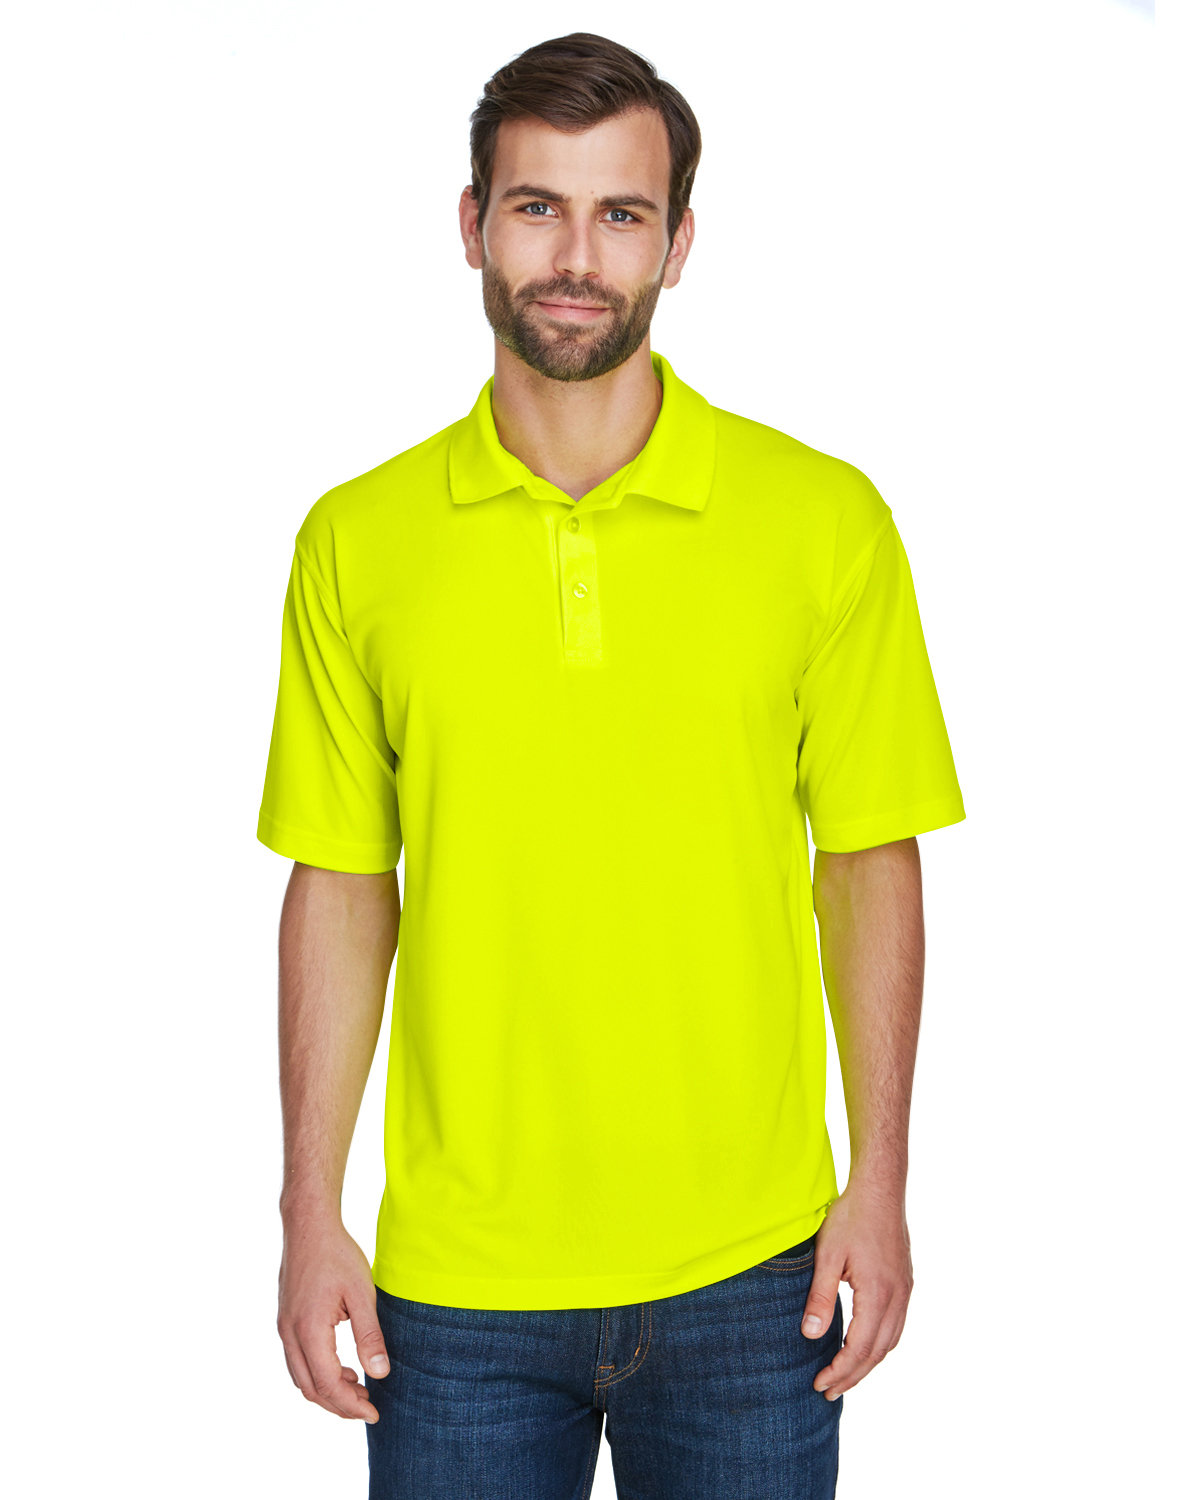 UltraClub Men's Cool & Dry Mesh Piqué Polo bright yellow 